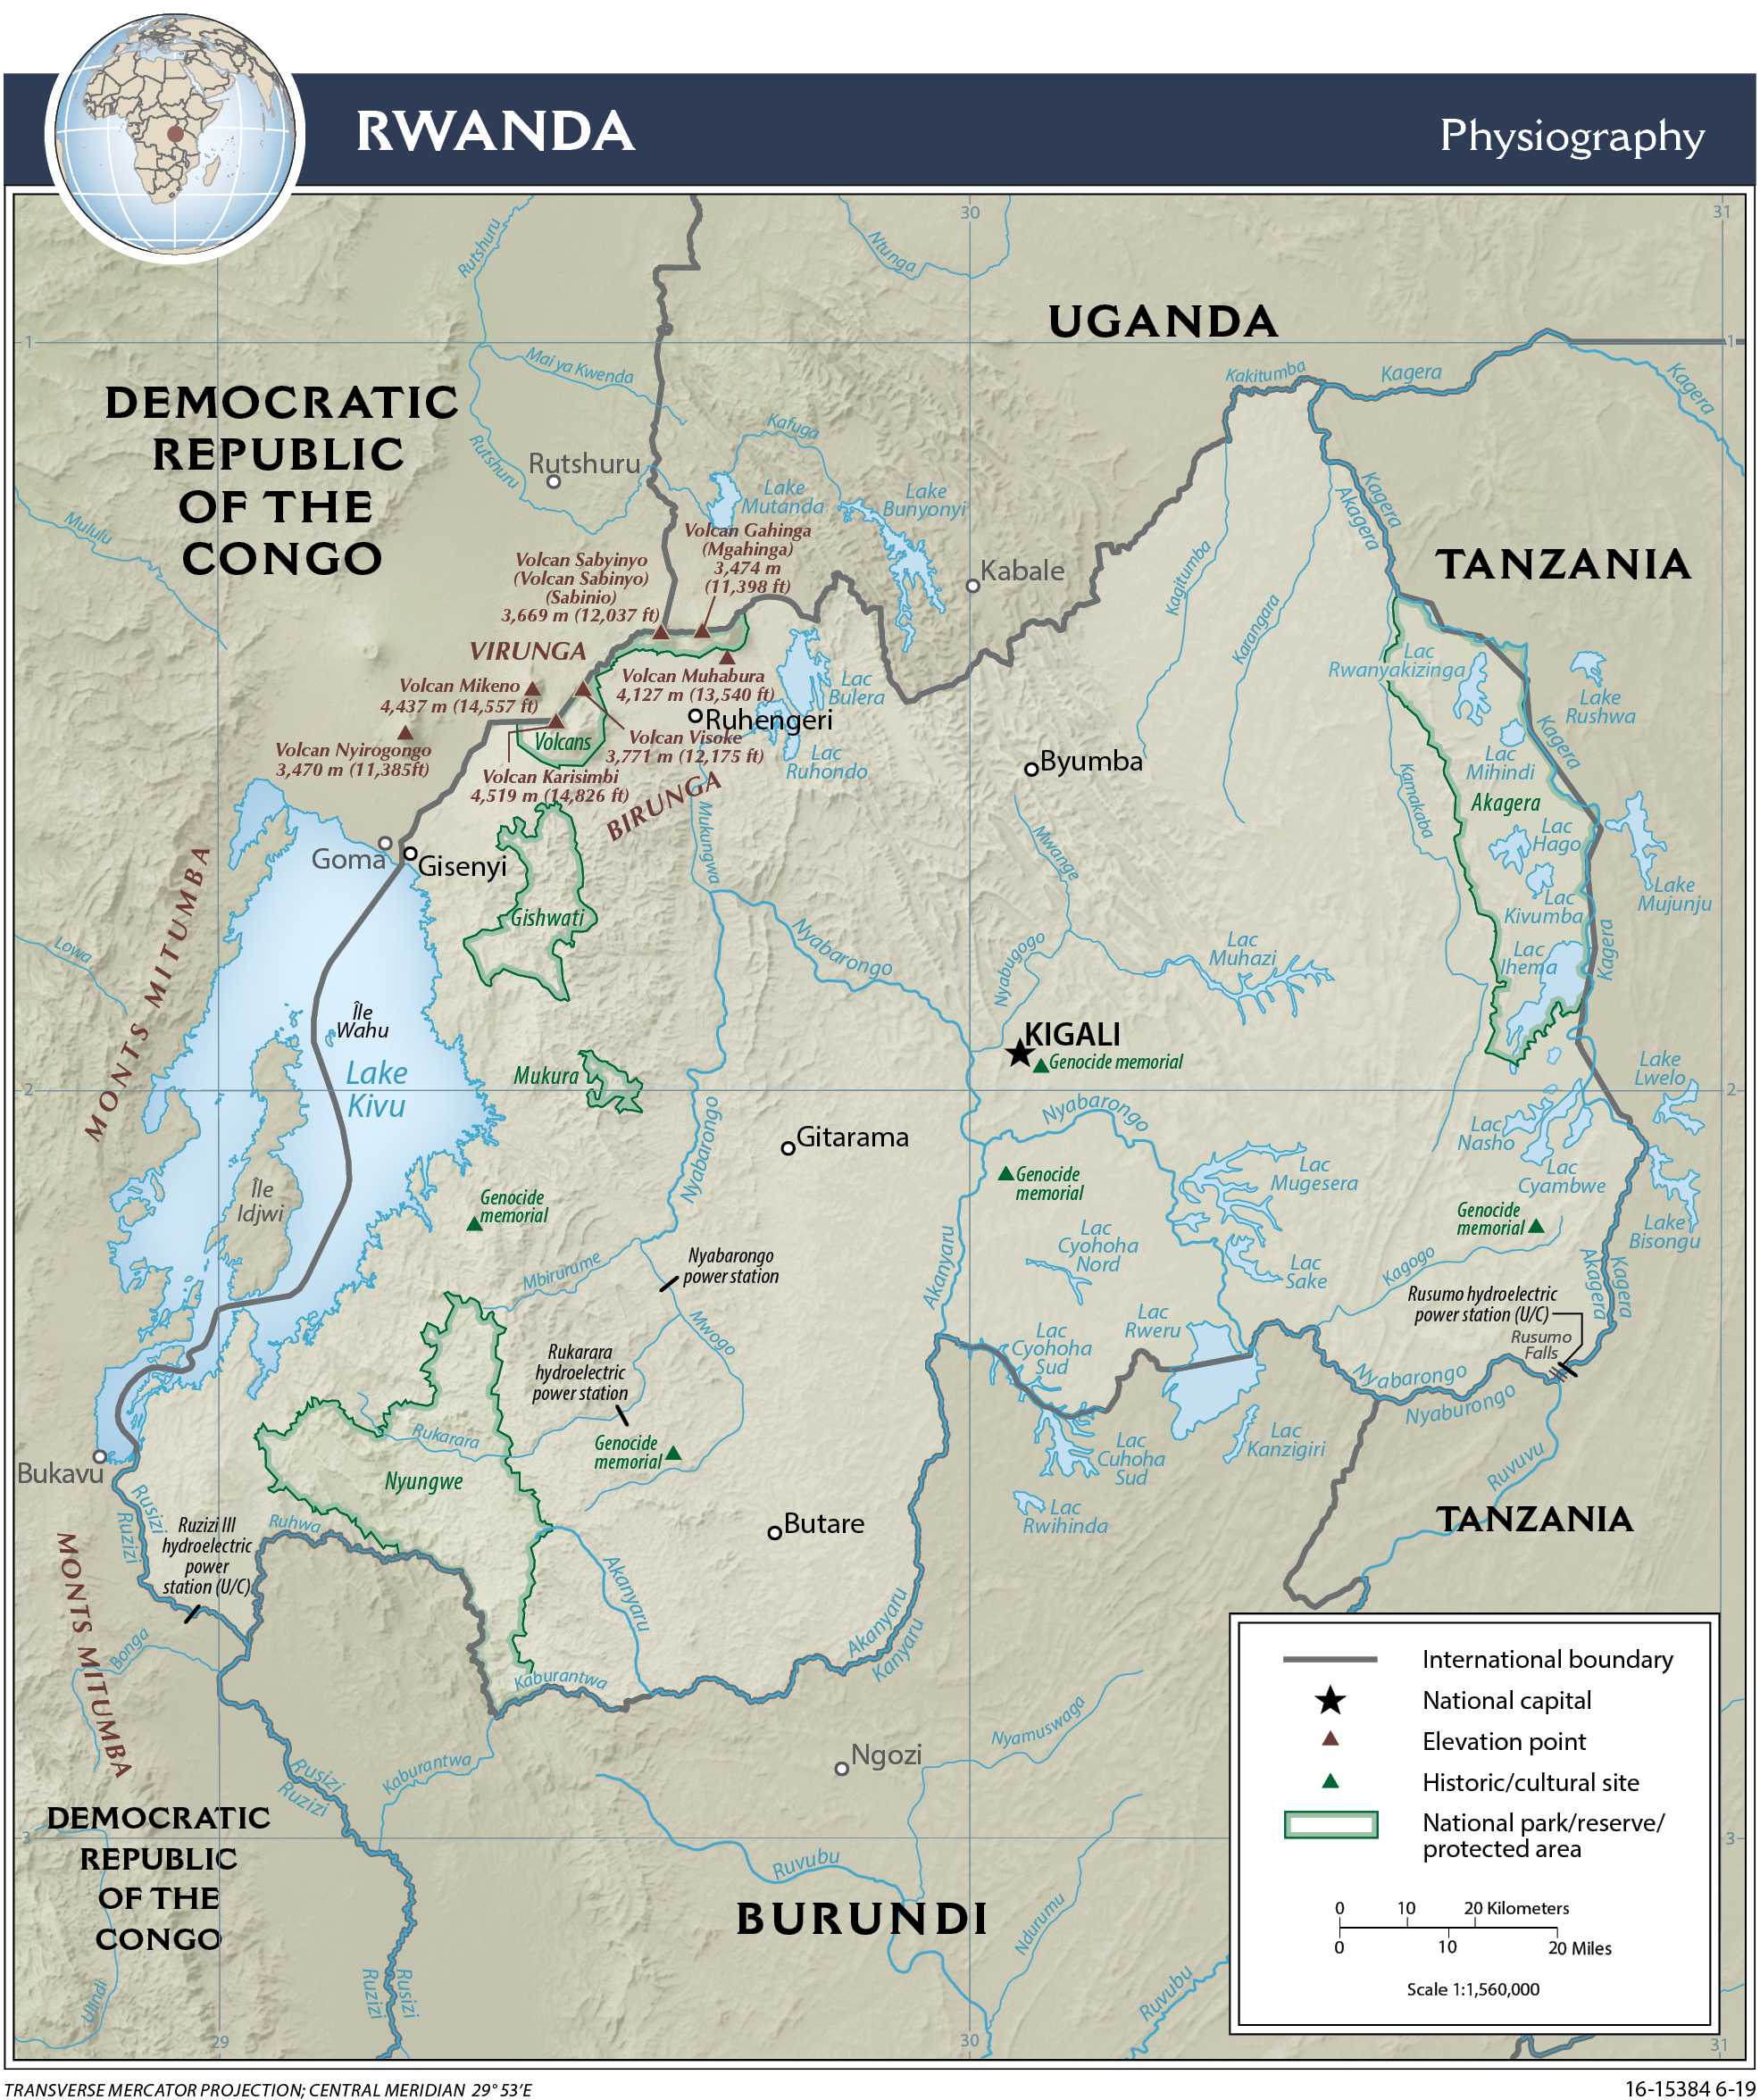 Physiographical map of Rwanda.